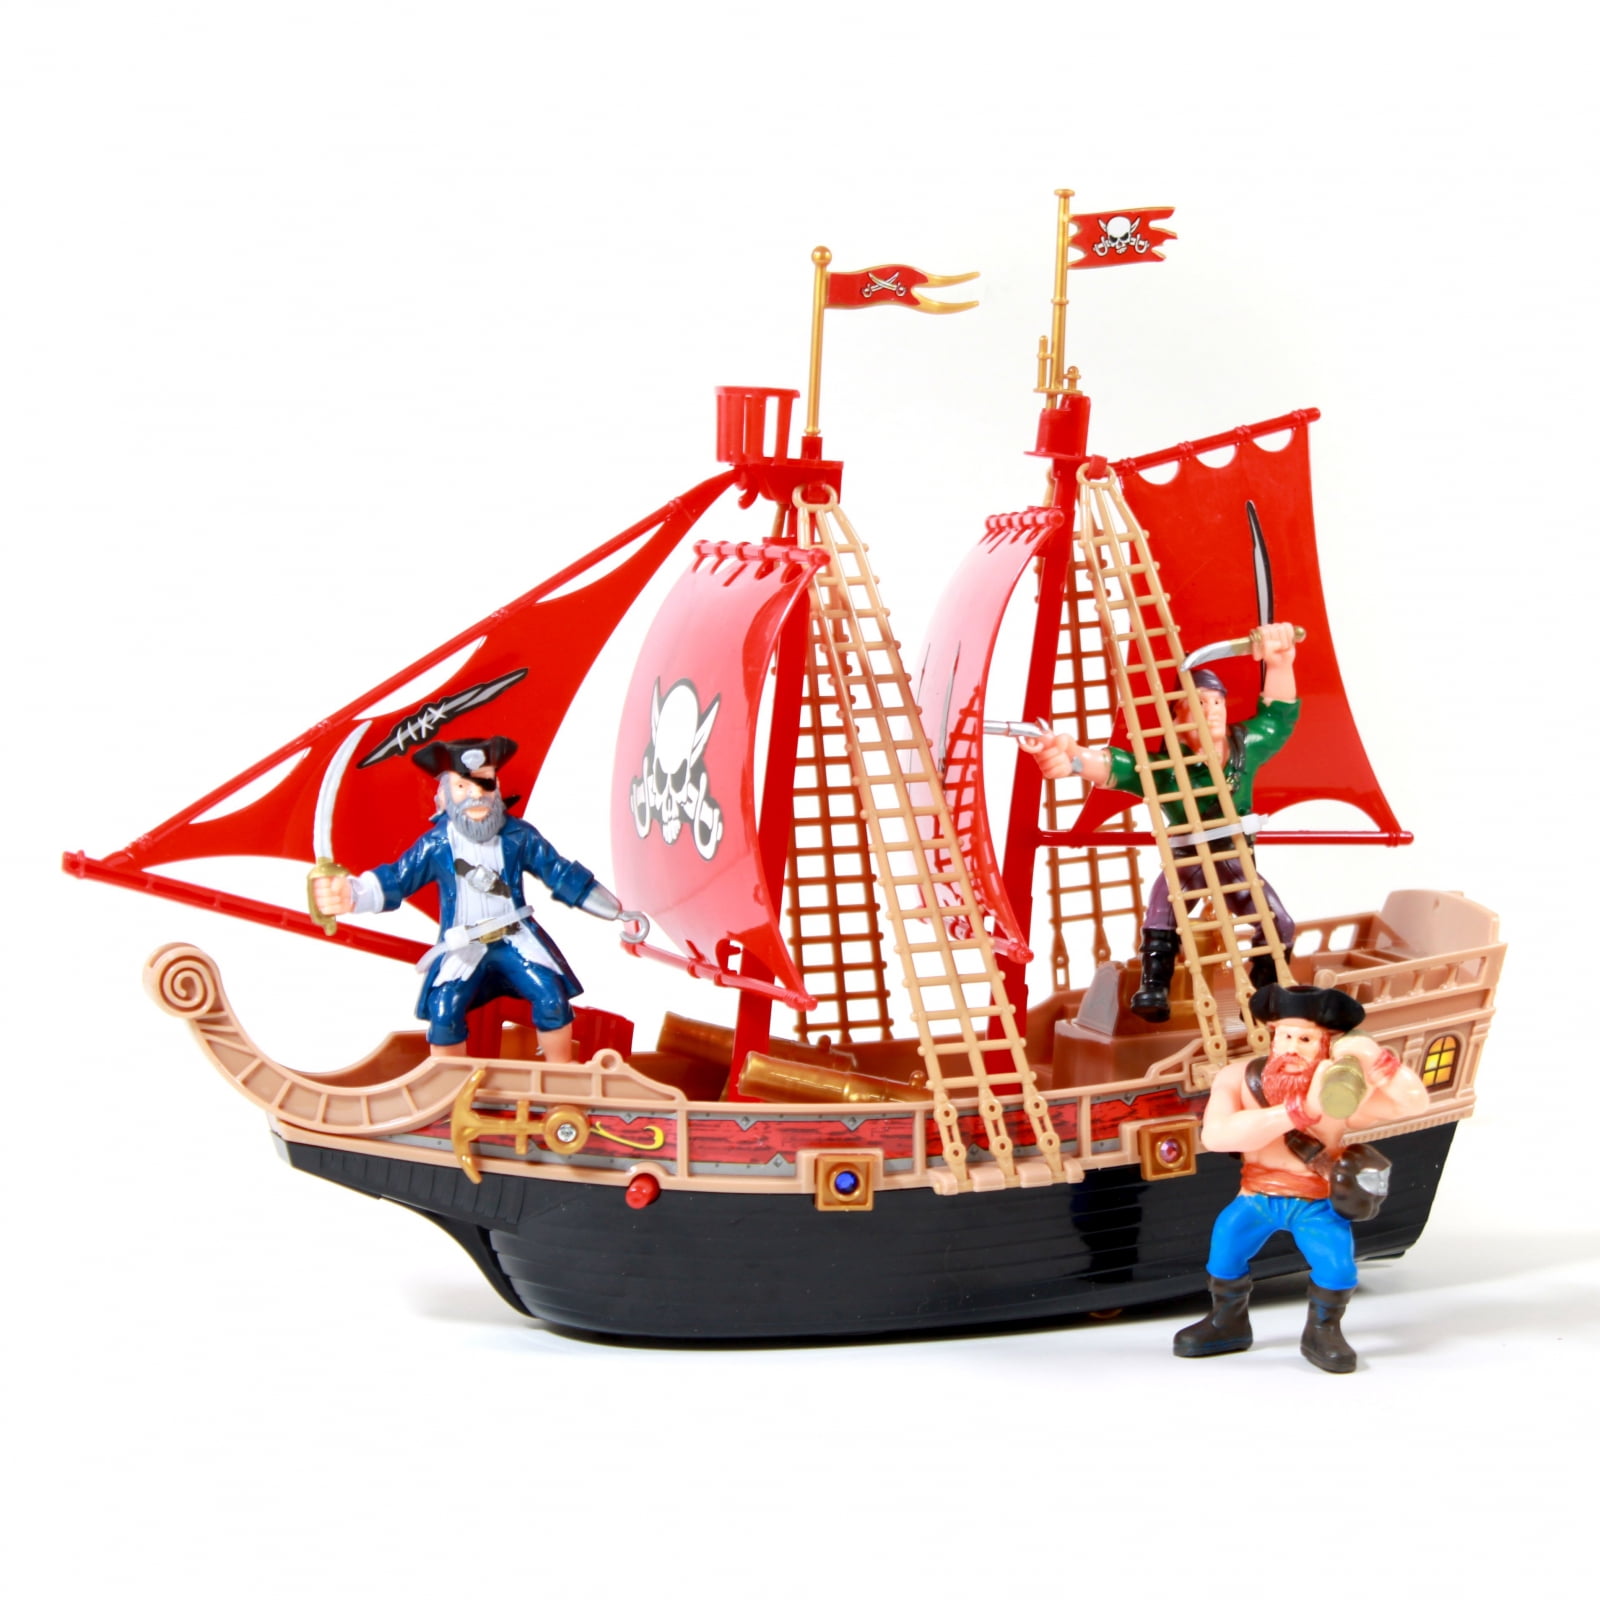 KidPlay Light up Pirate Ship Imagination Adventure Boys Boat Toy 